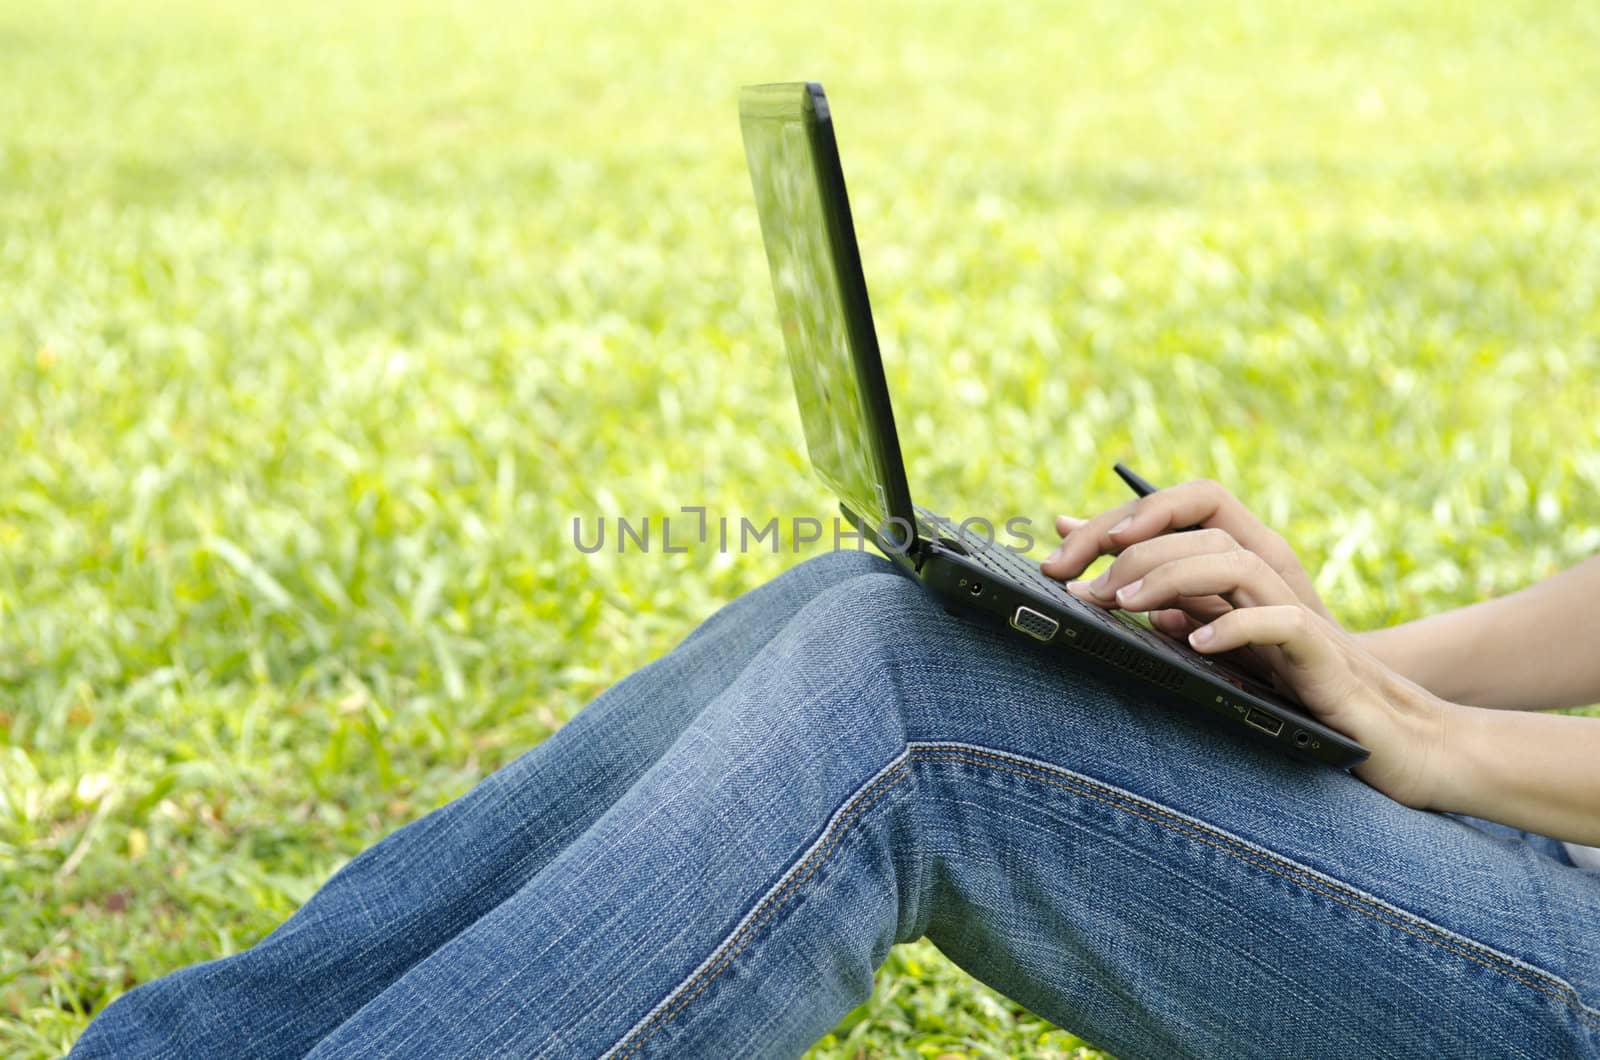 asian using laptop by yuliang11